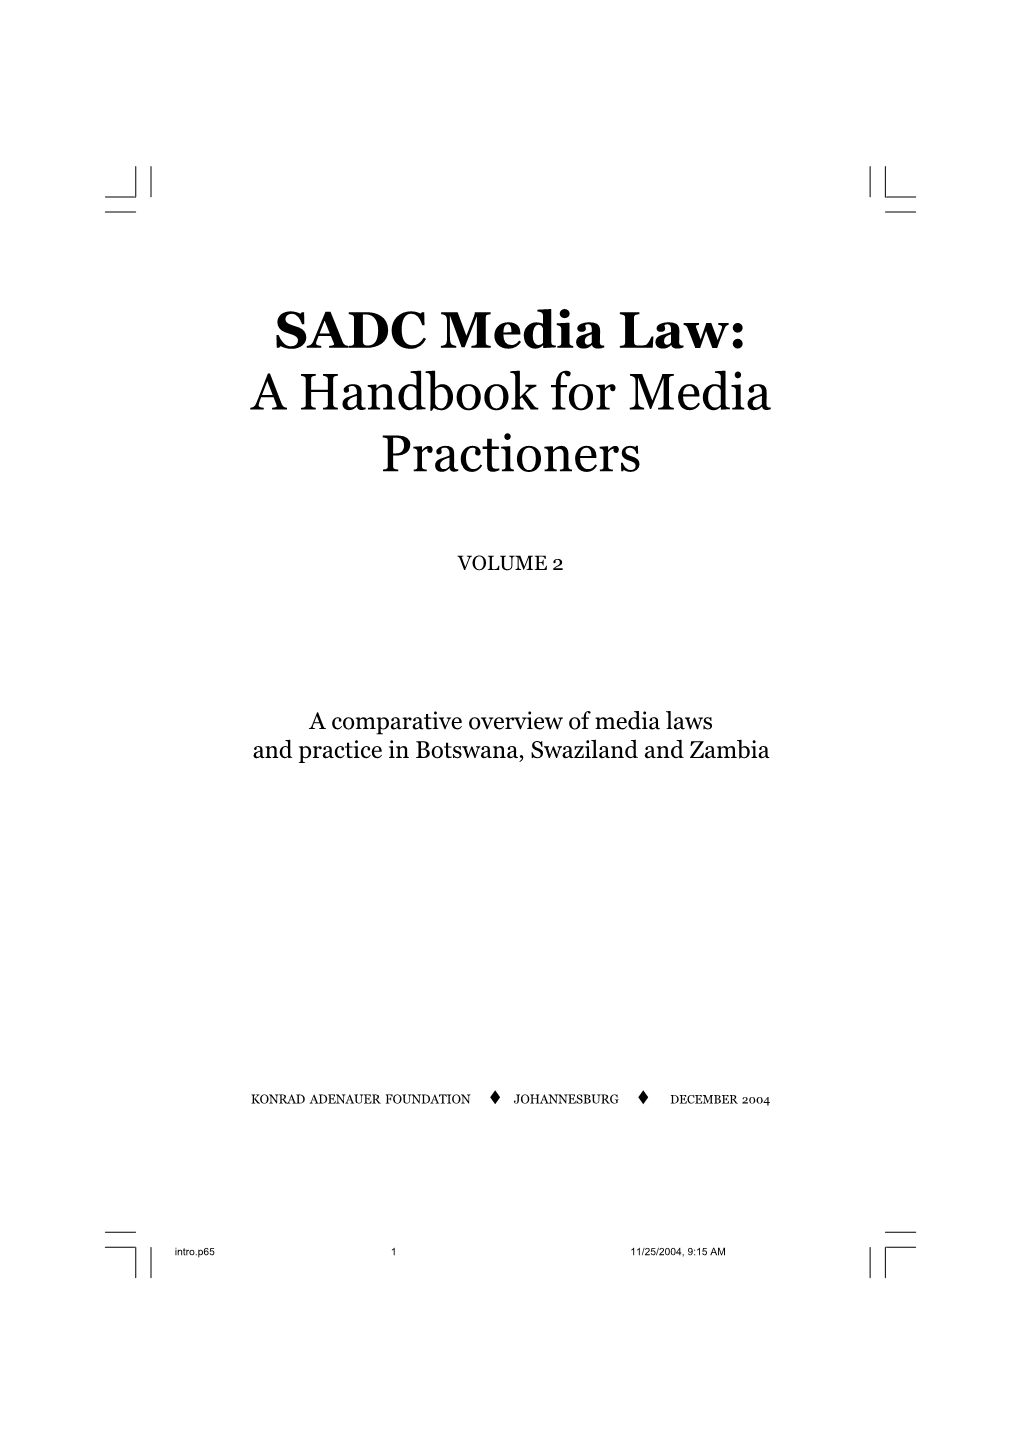 SADC Media Law: a Handbook for Media Practioners